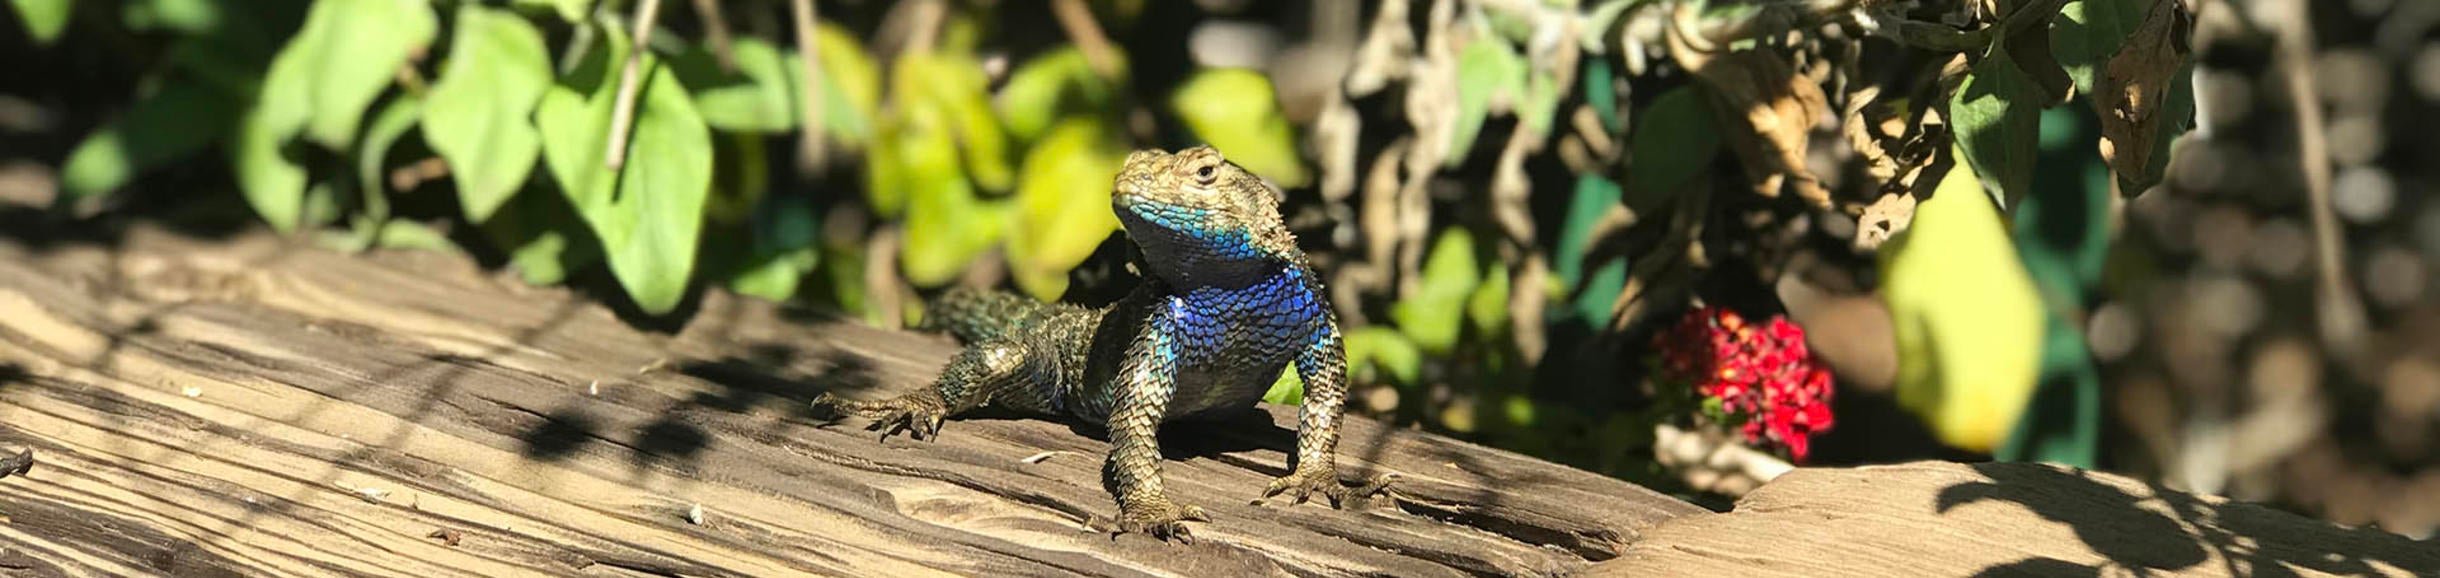 UC Riverside Botanic Gardens lizard